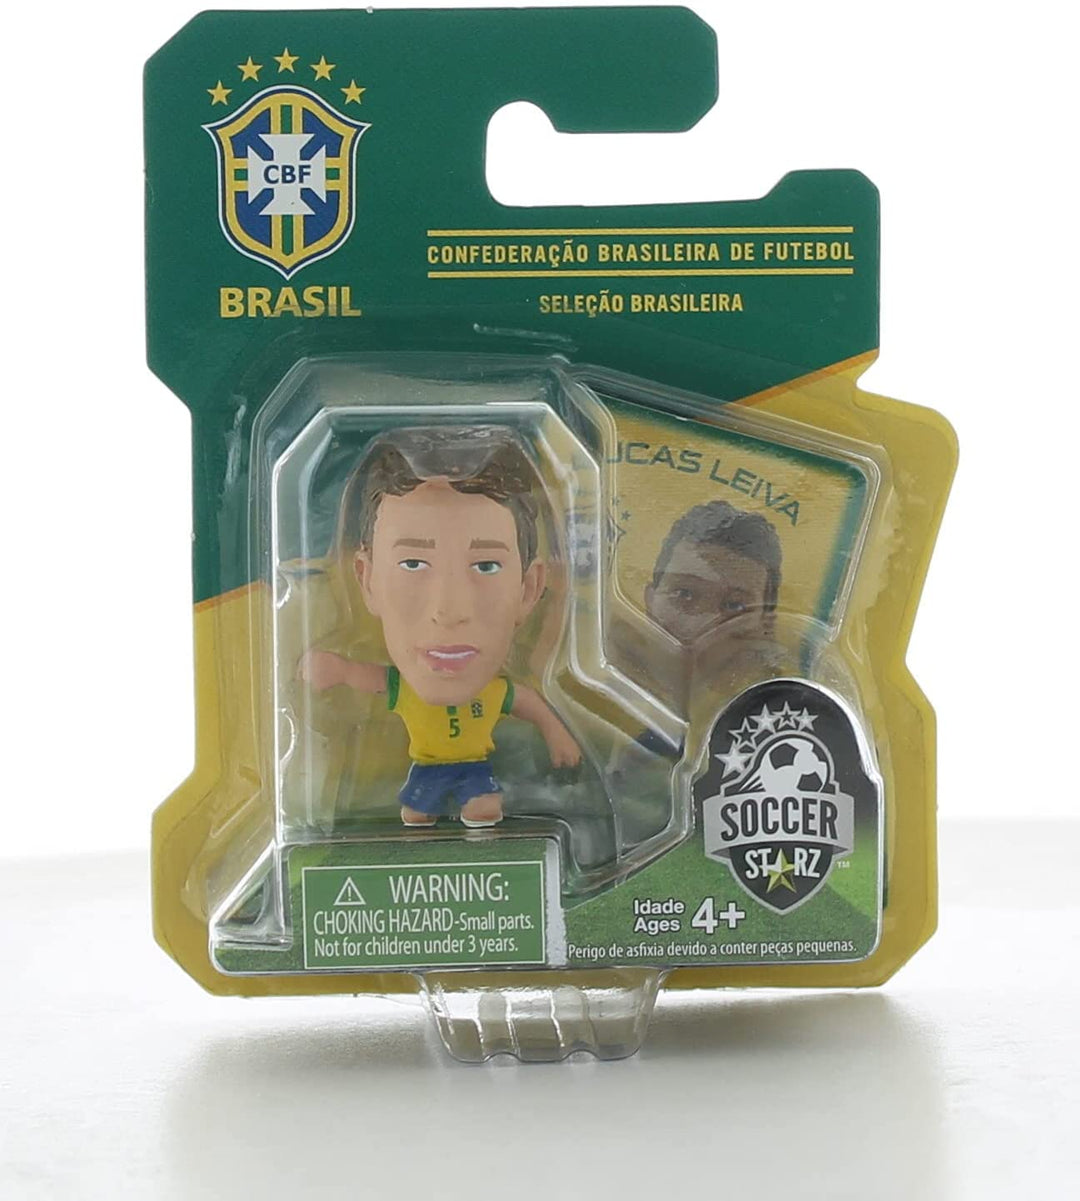 SoccerStarz Brazil International Figurine Blister Pack con il kit casalingo di Lucas Leiva